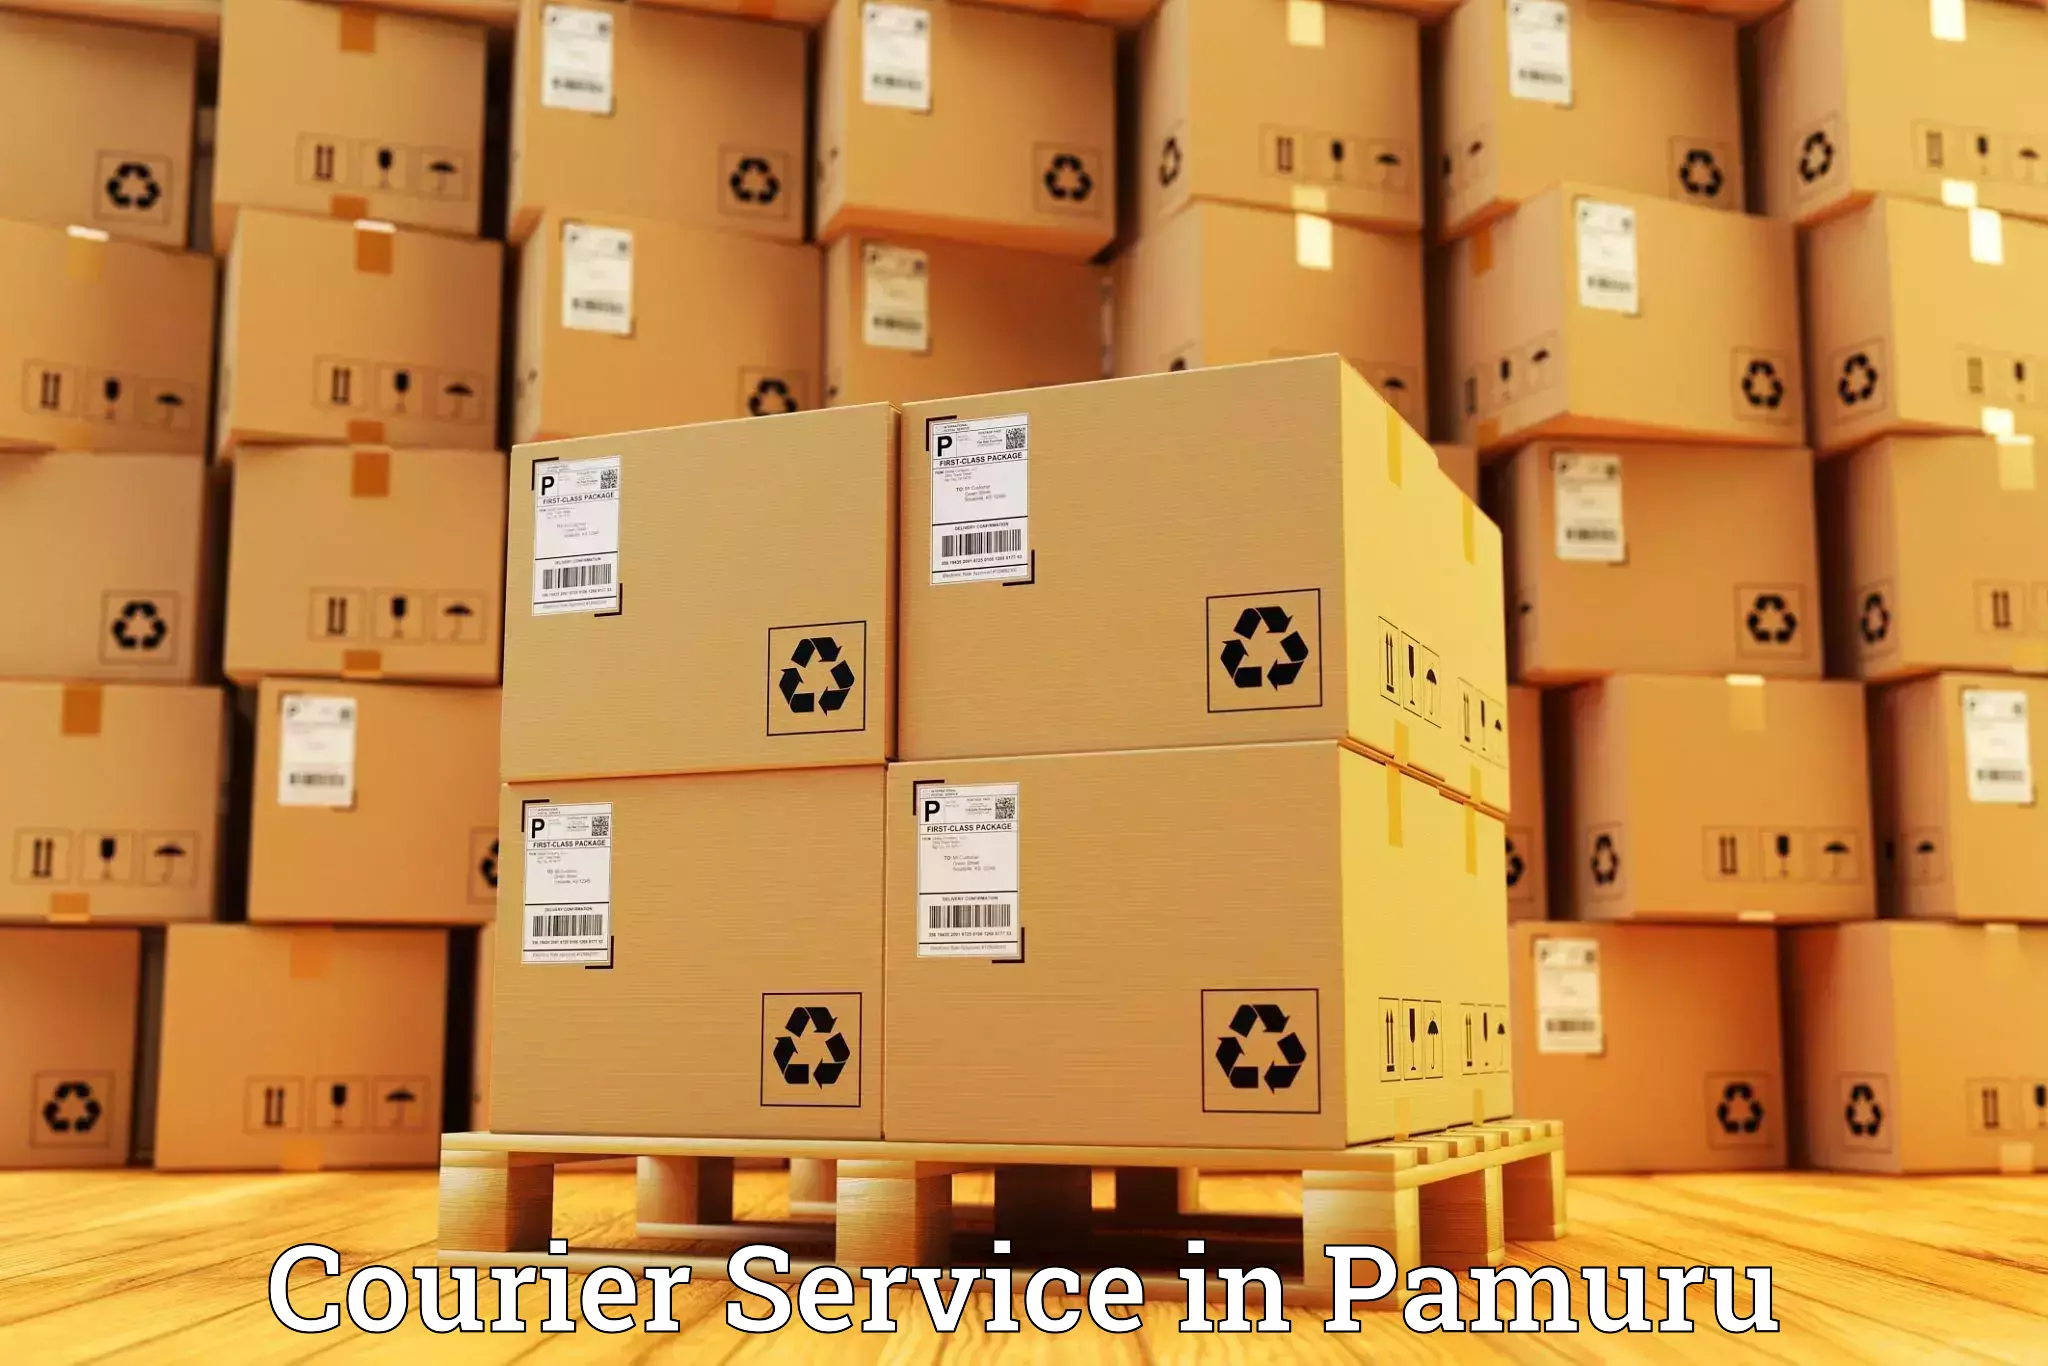 Enhanced tracking features in Pamuru